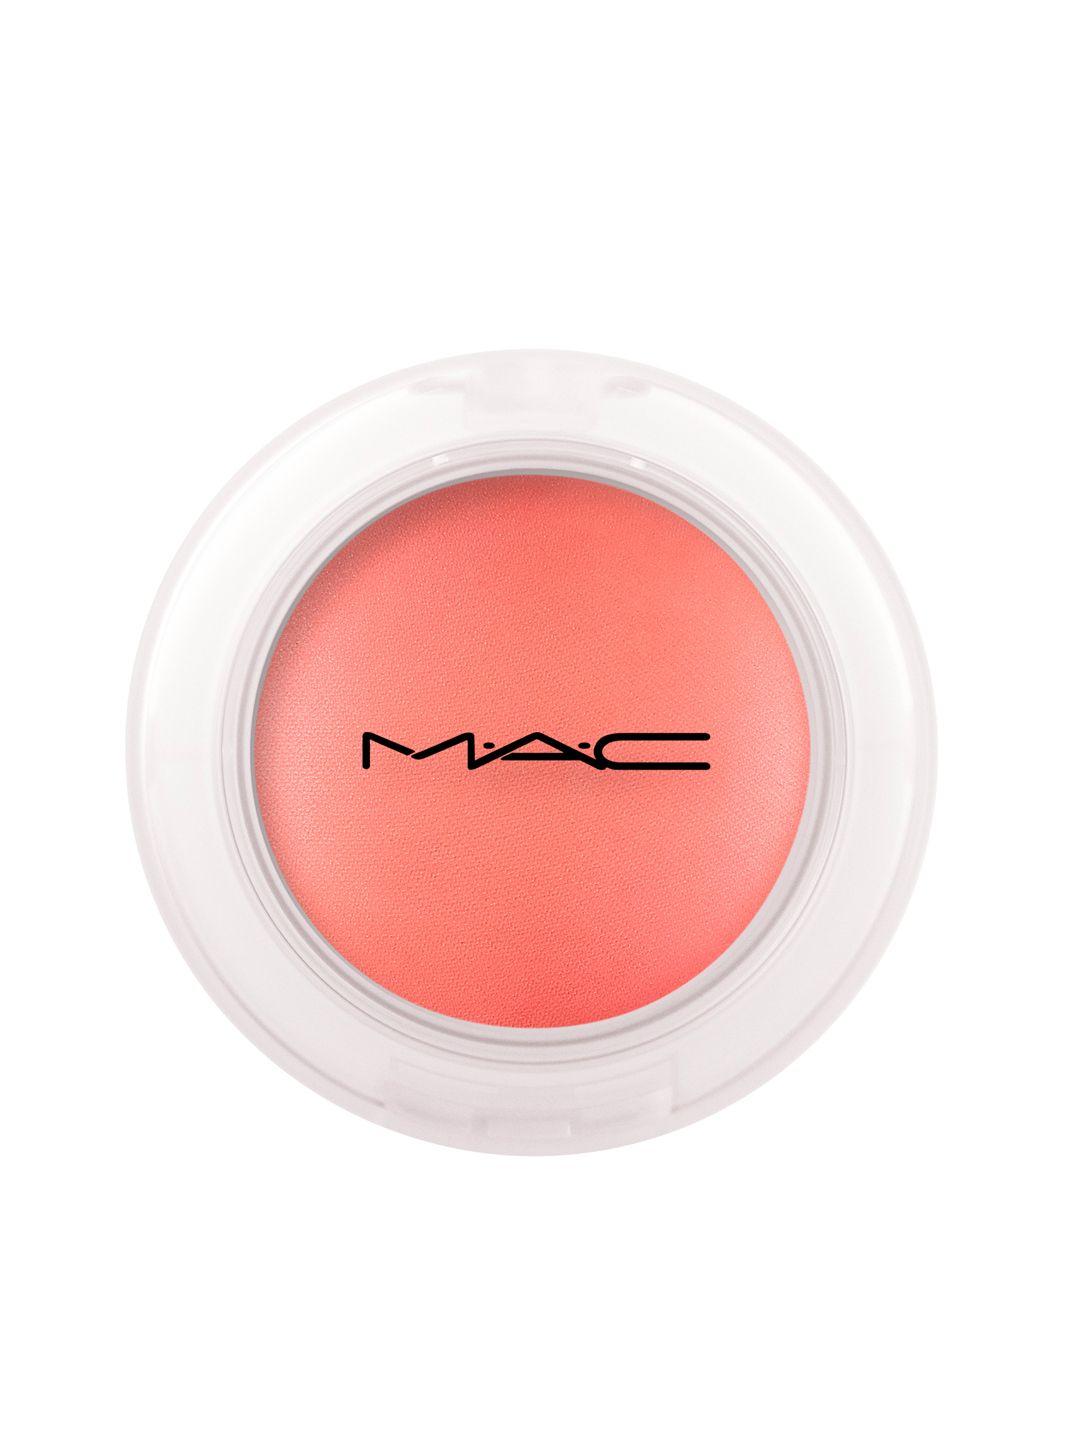 m.a.c glow play blush - thats peachy